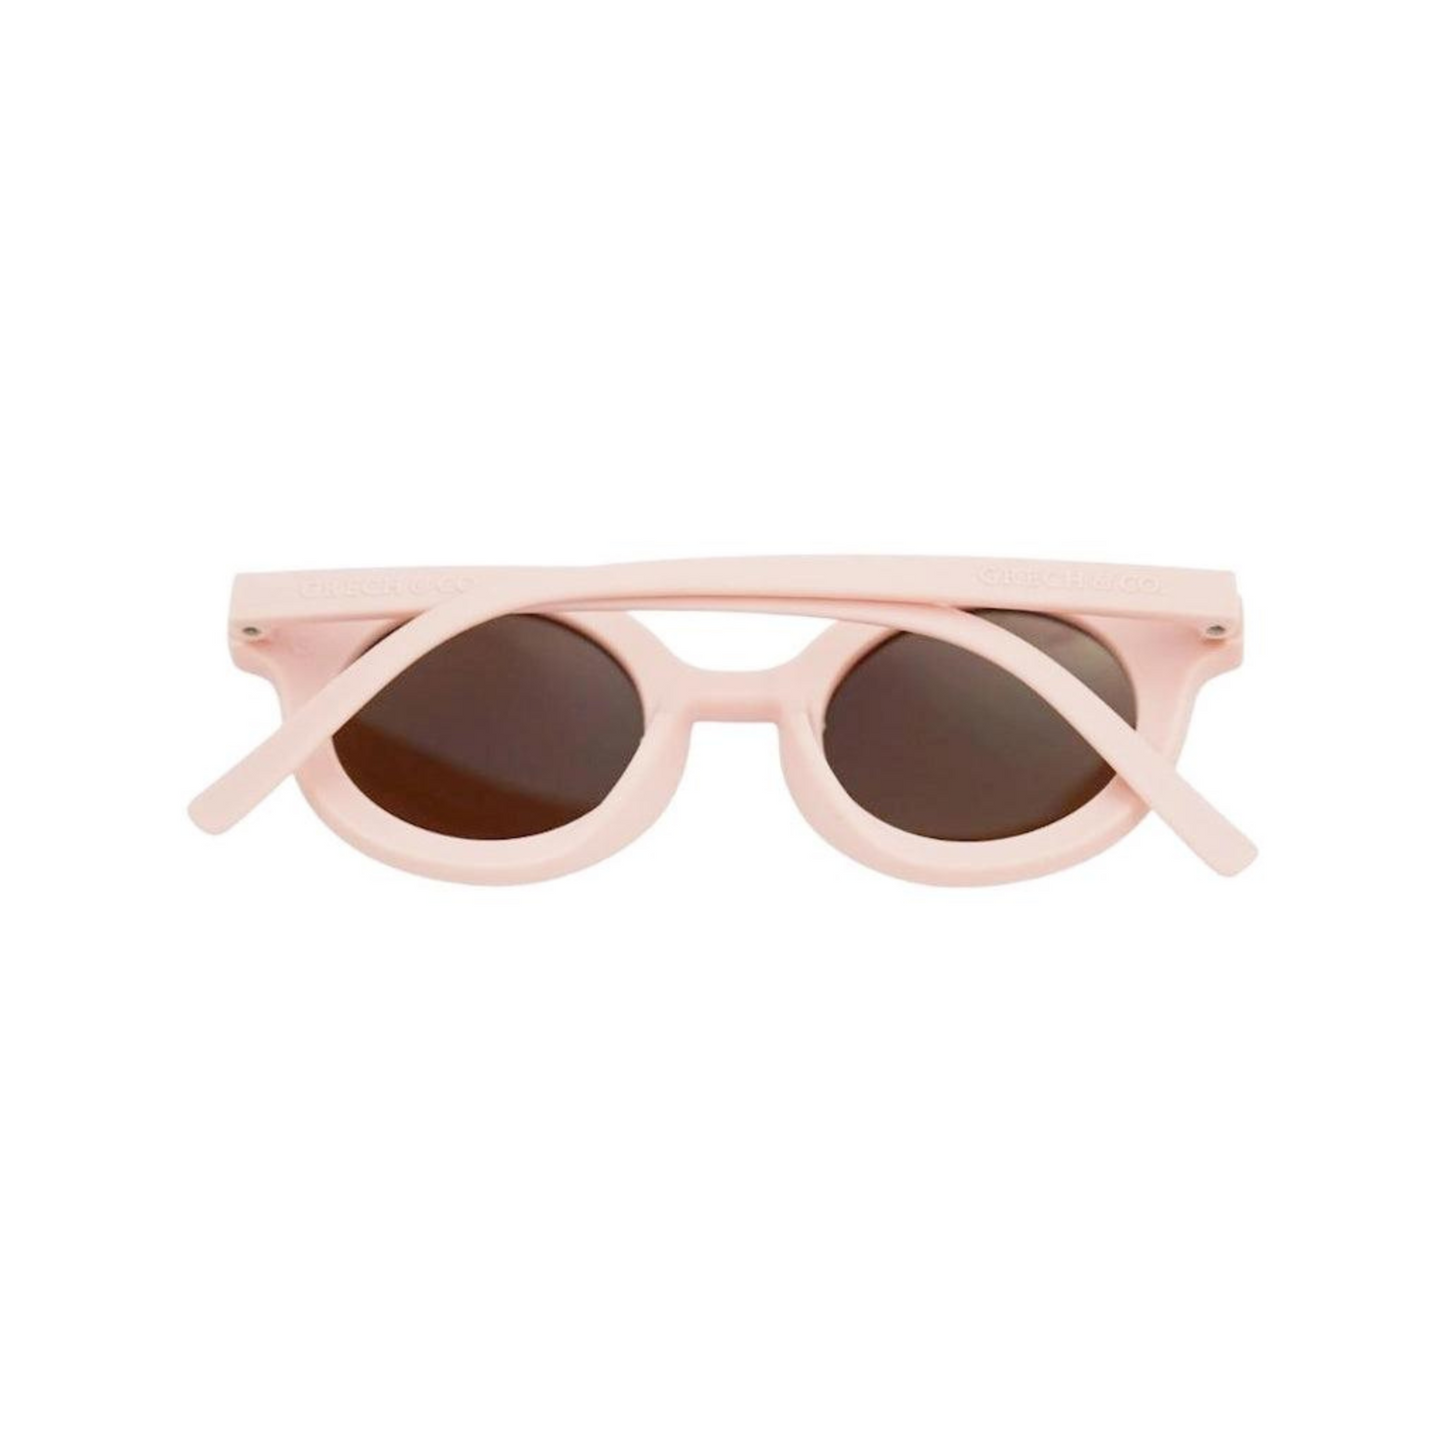 Original Sustainable Children's Sunglasses in Blush